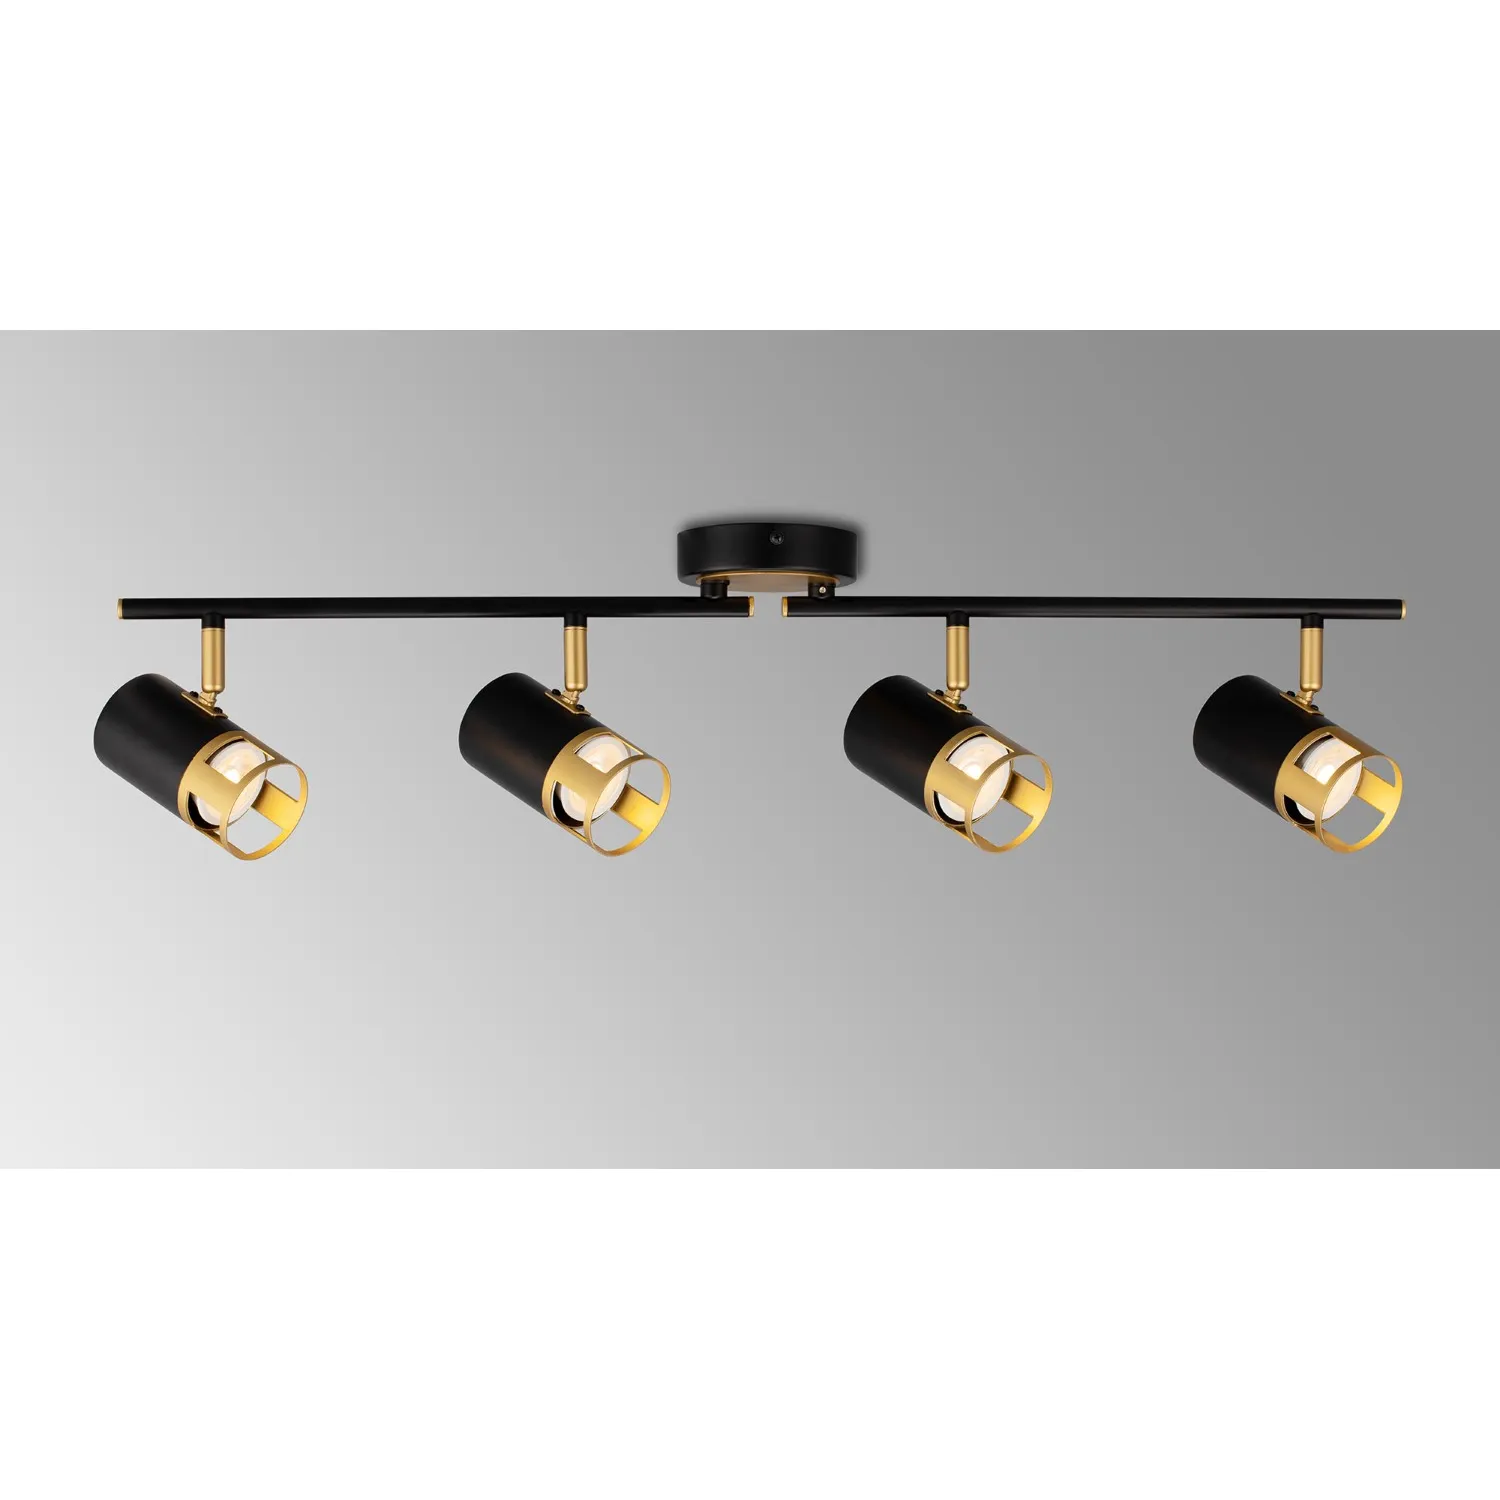 Essex 4 Light Linear Bar Spotlight GU10, Black Painted Gold